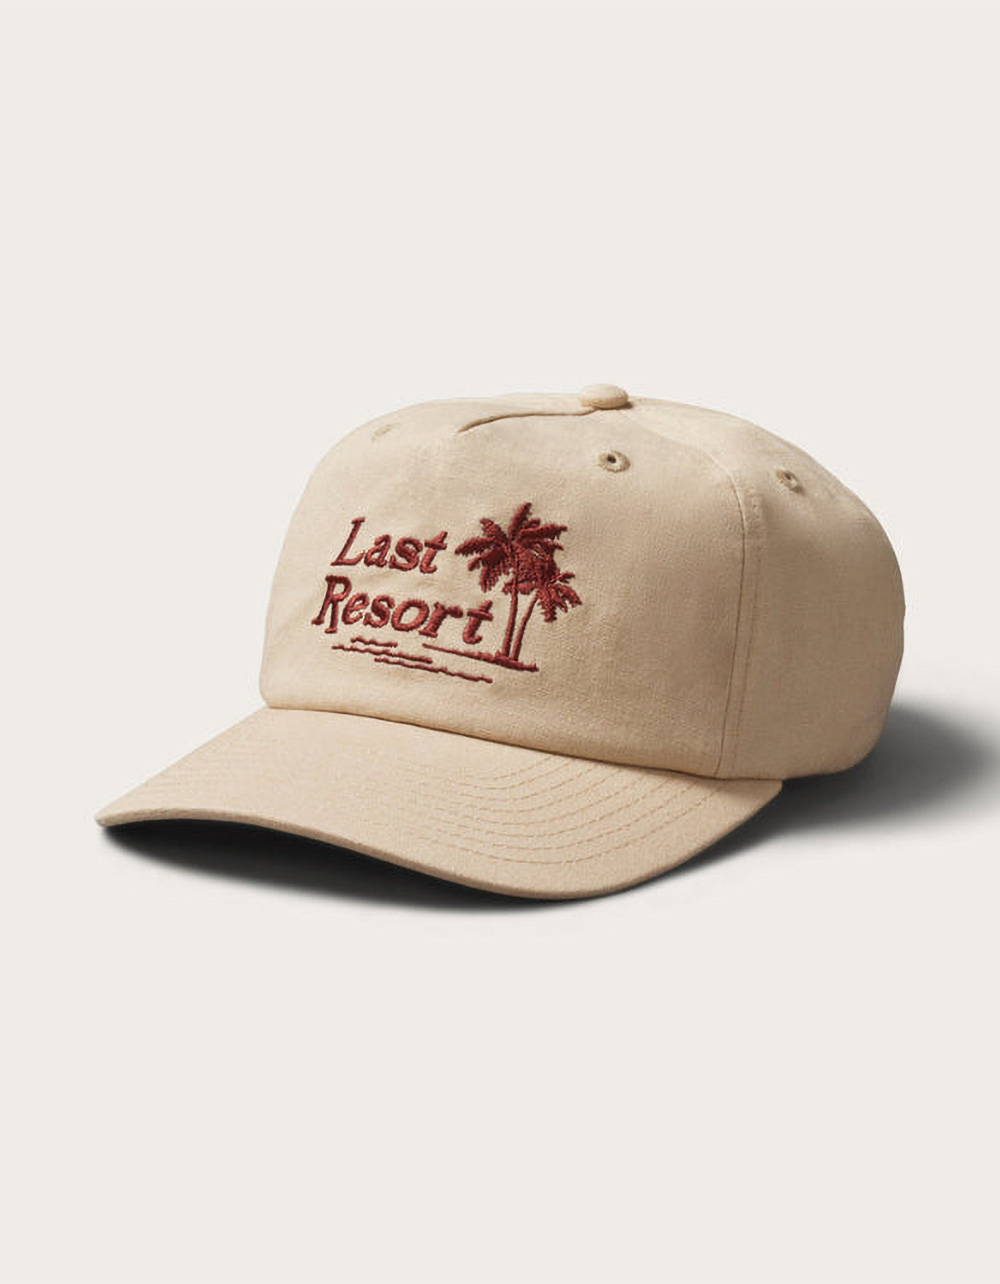 HEMLOCK HAT CO. Last Resort Snapback Hat